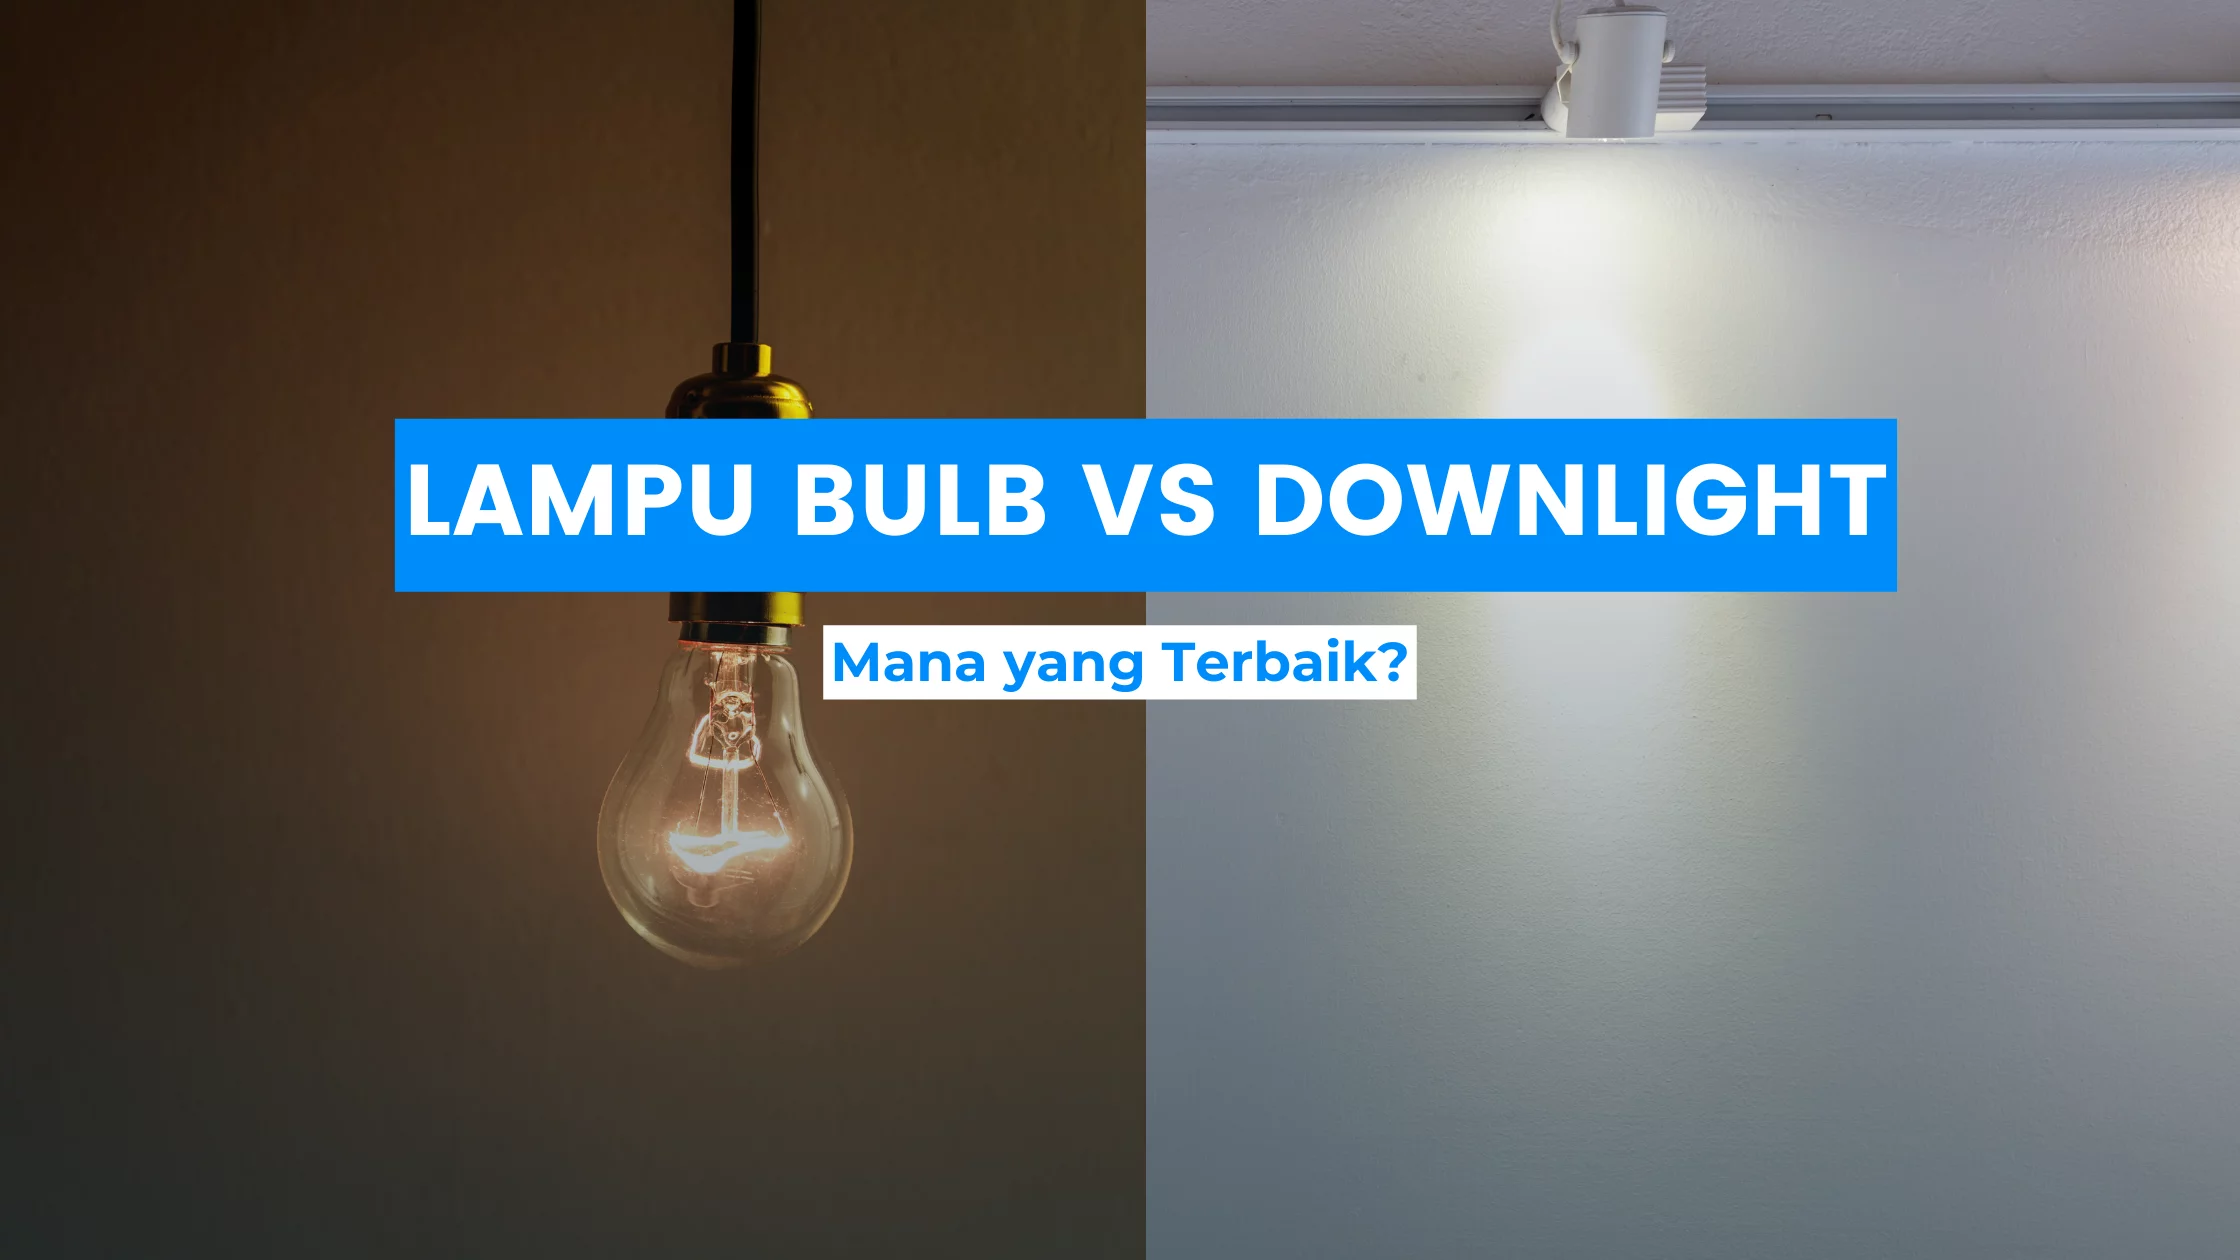 Lampu Bulb vs Downlight